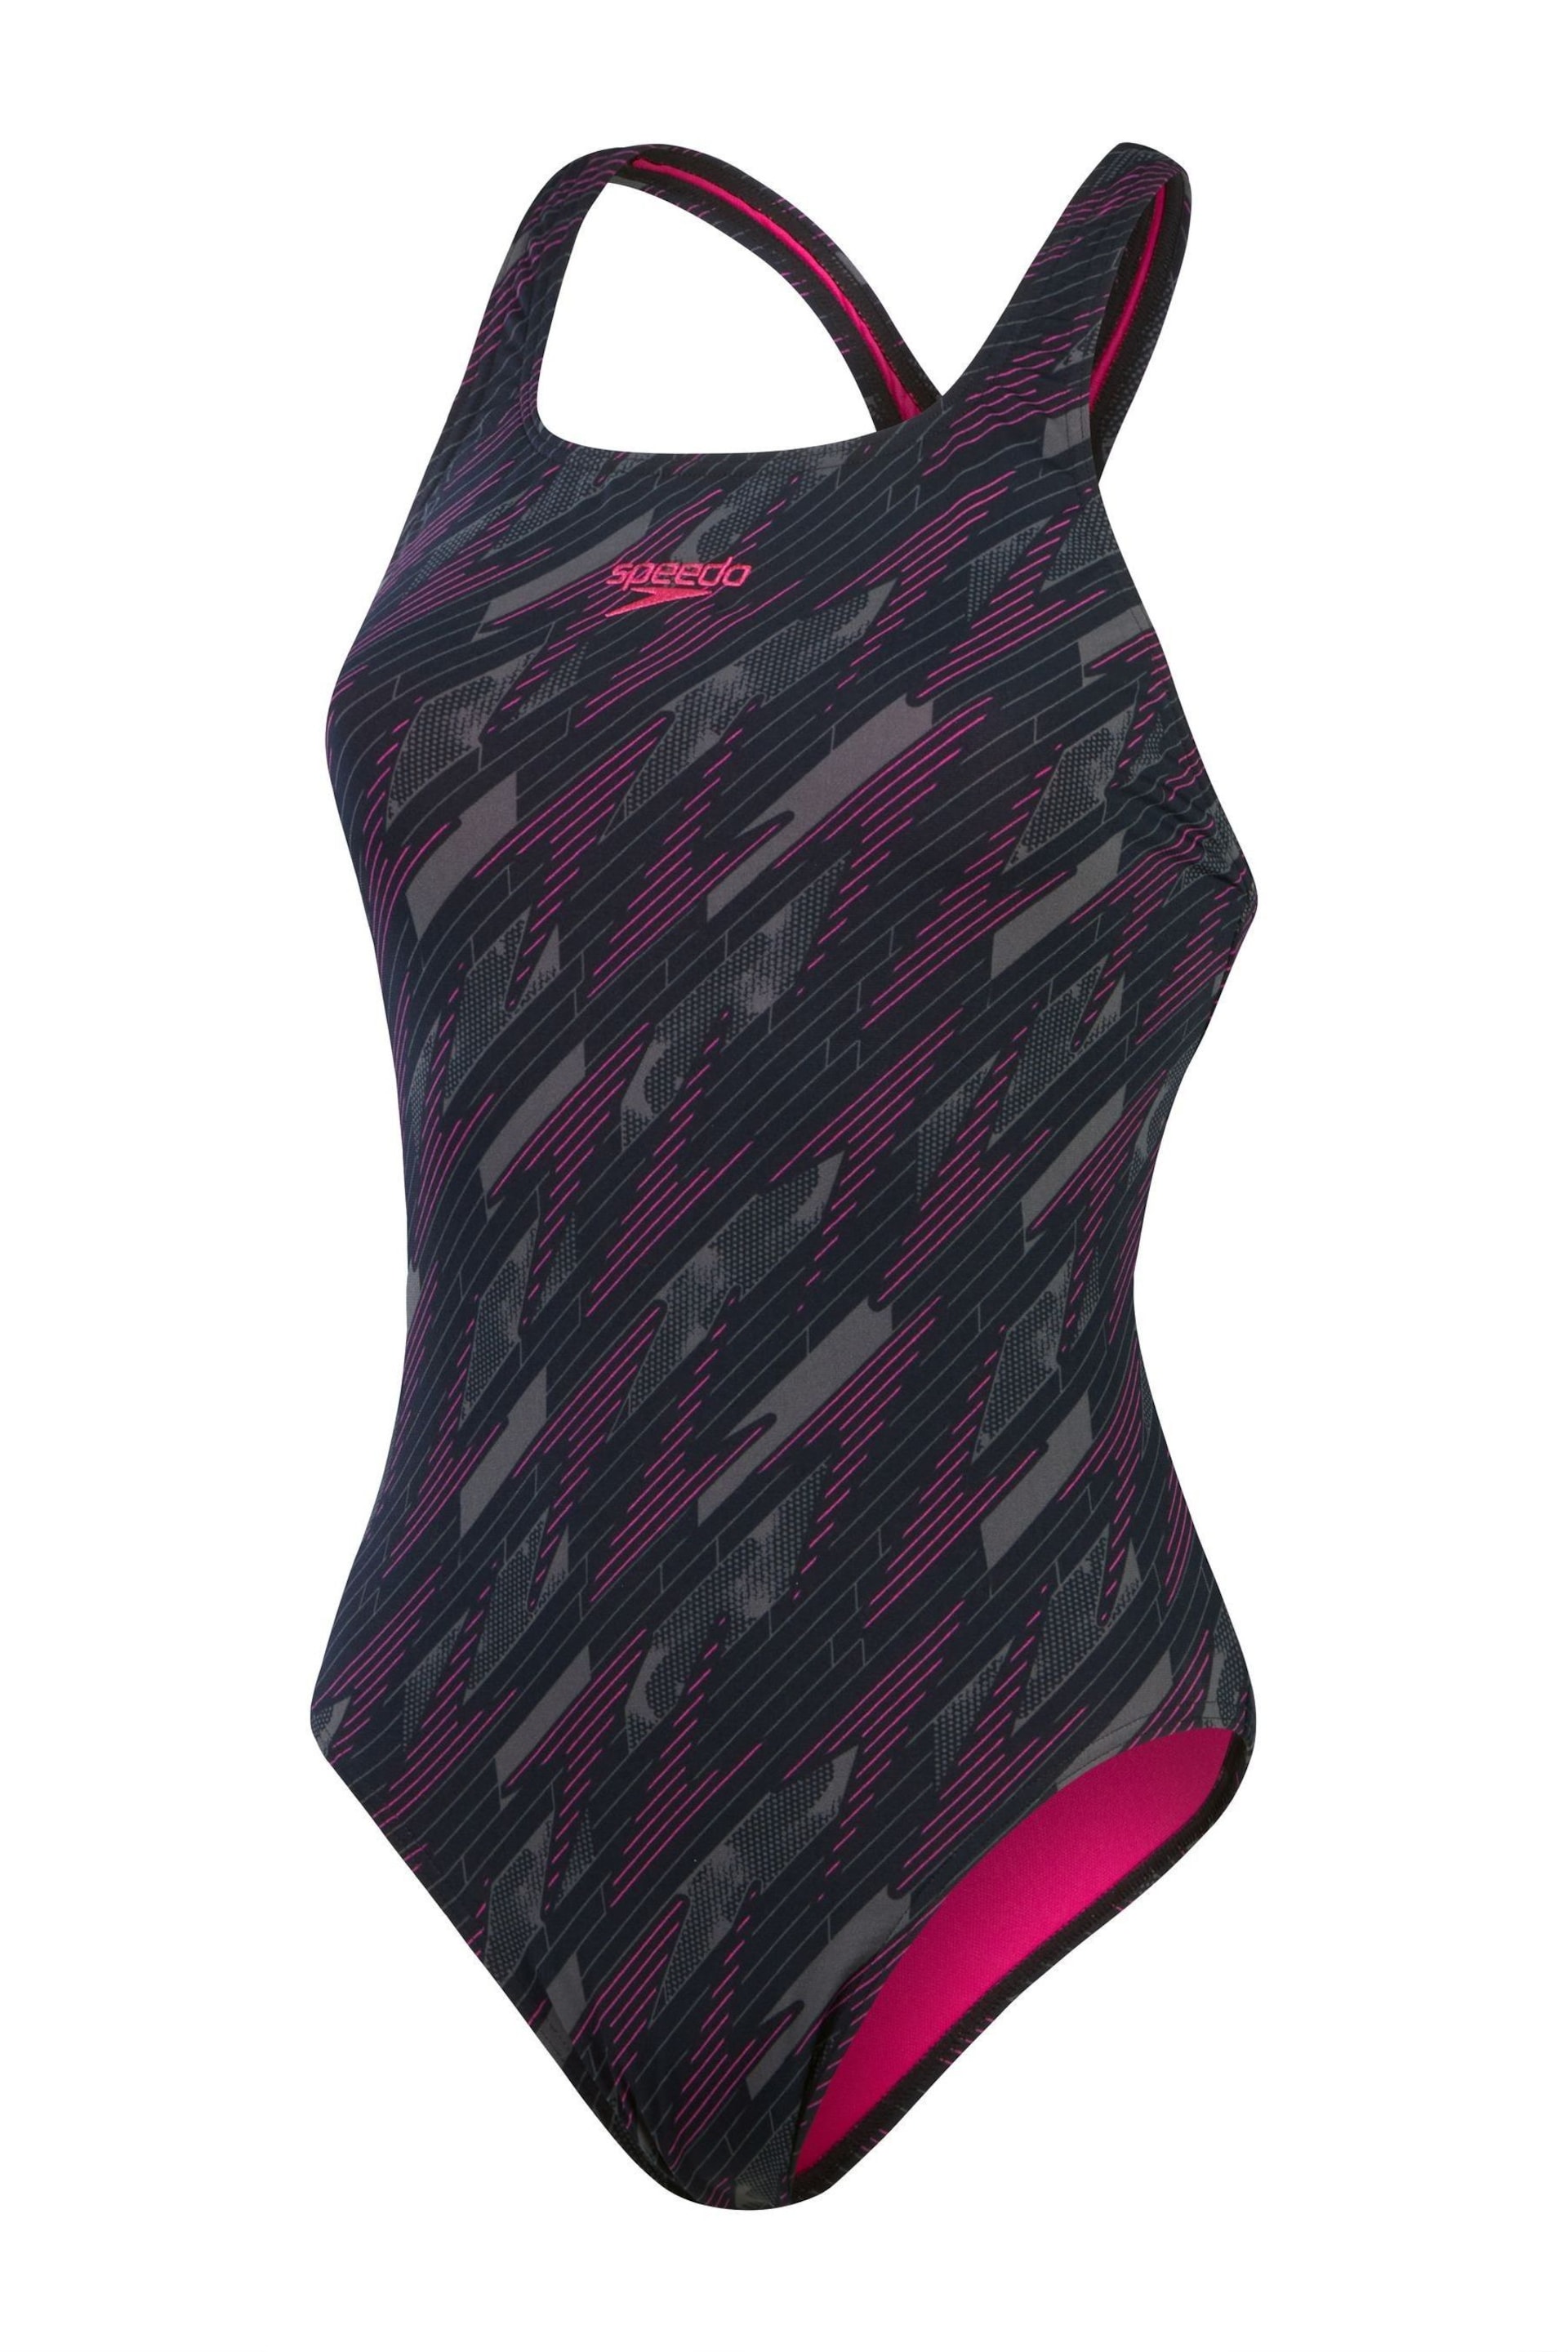 Speedo Black/Pink Womens Hyper Boom All-Over Medalist Swimsuit - Image 2 of 6